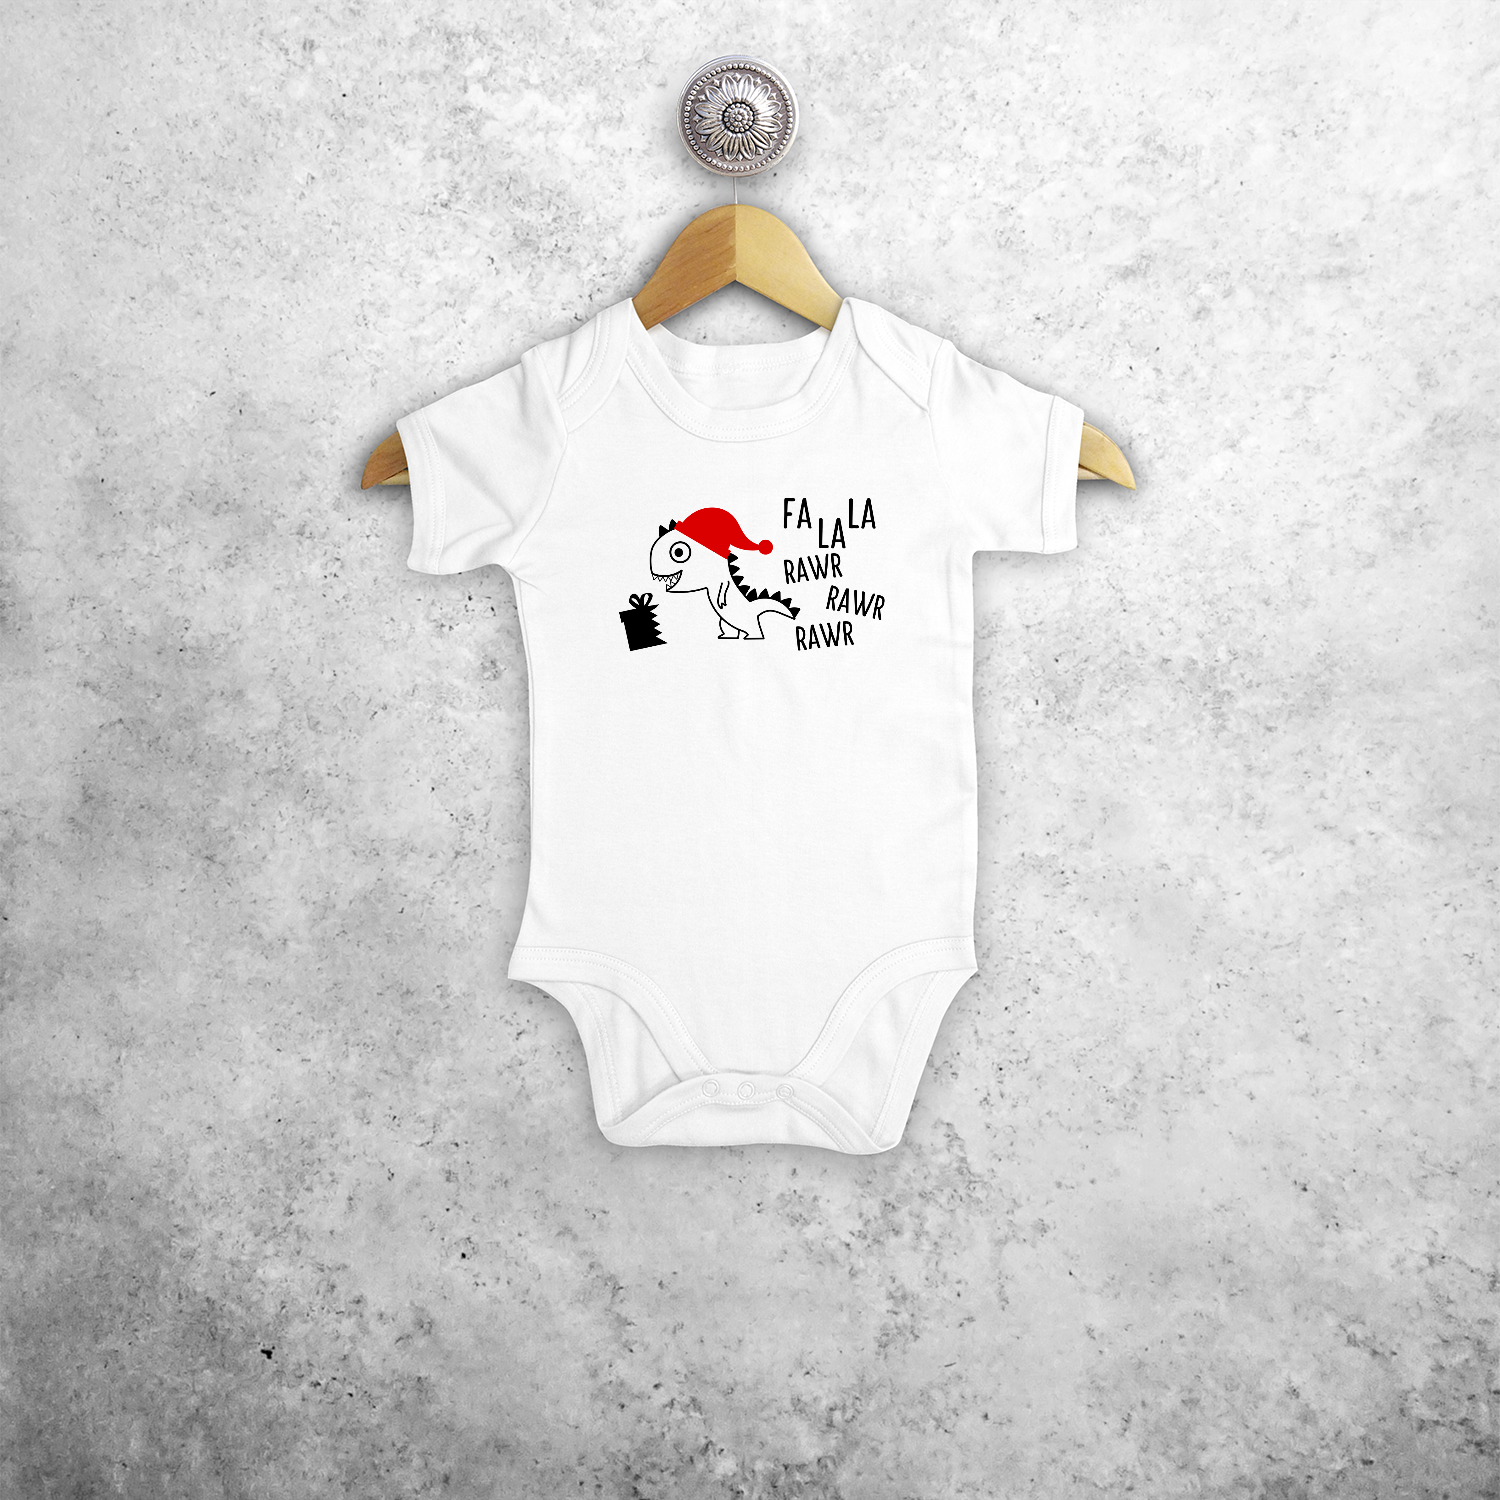 Baby or toddler bodysuit with short sleeves, with Dino ‘Fla La La Rawr Rawr Rawr’ print by KMLeon.